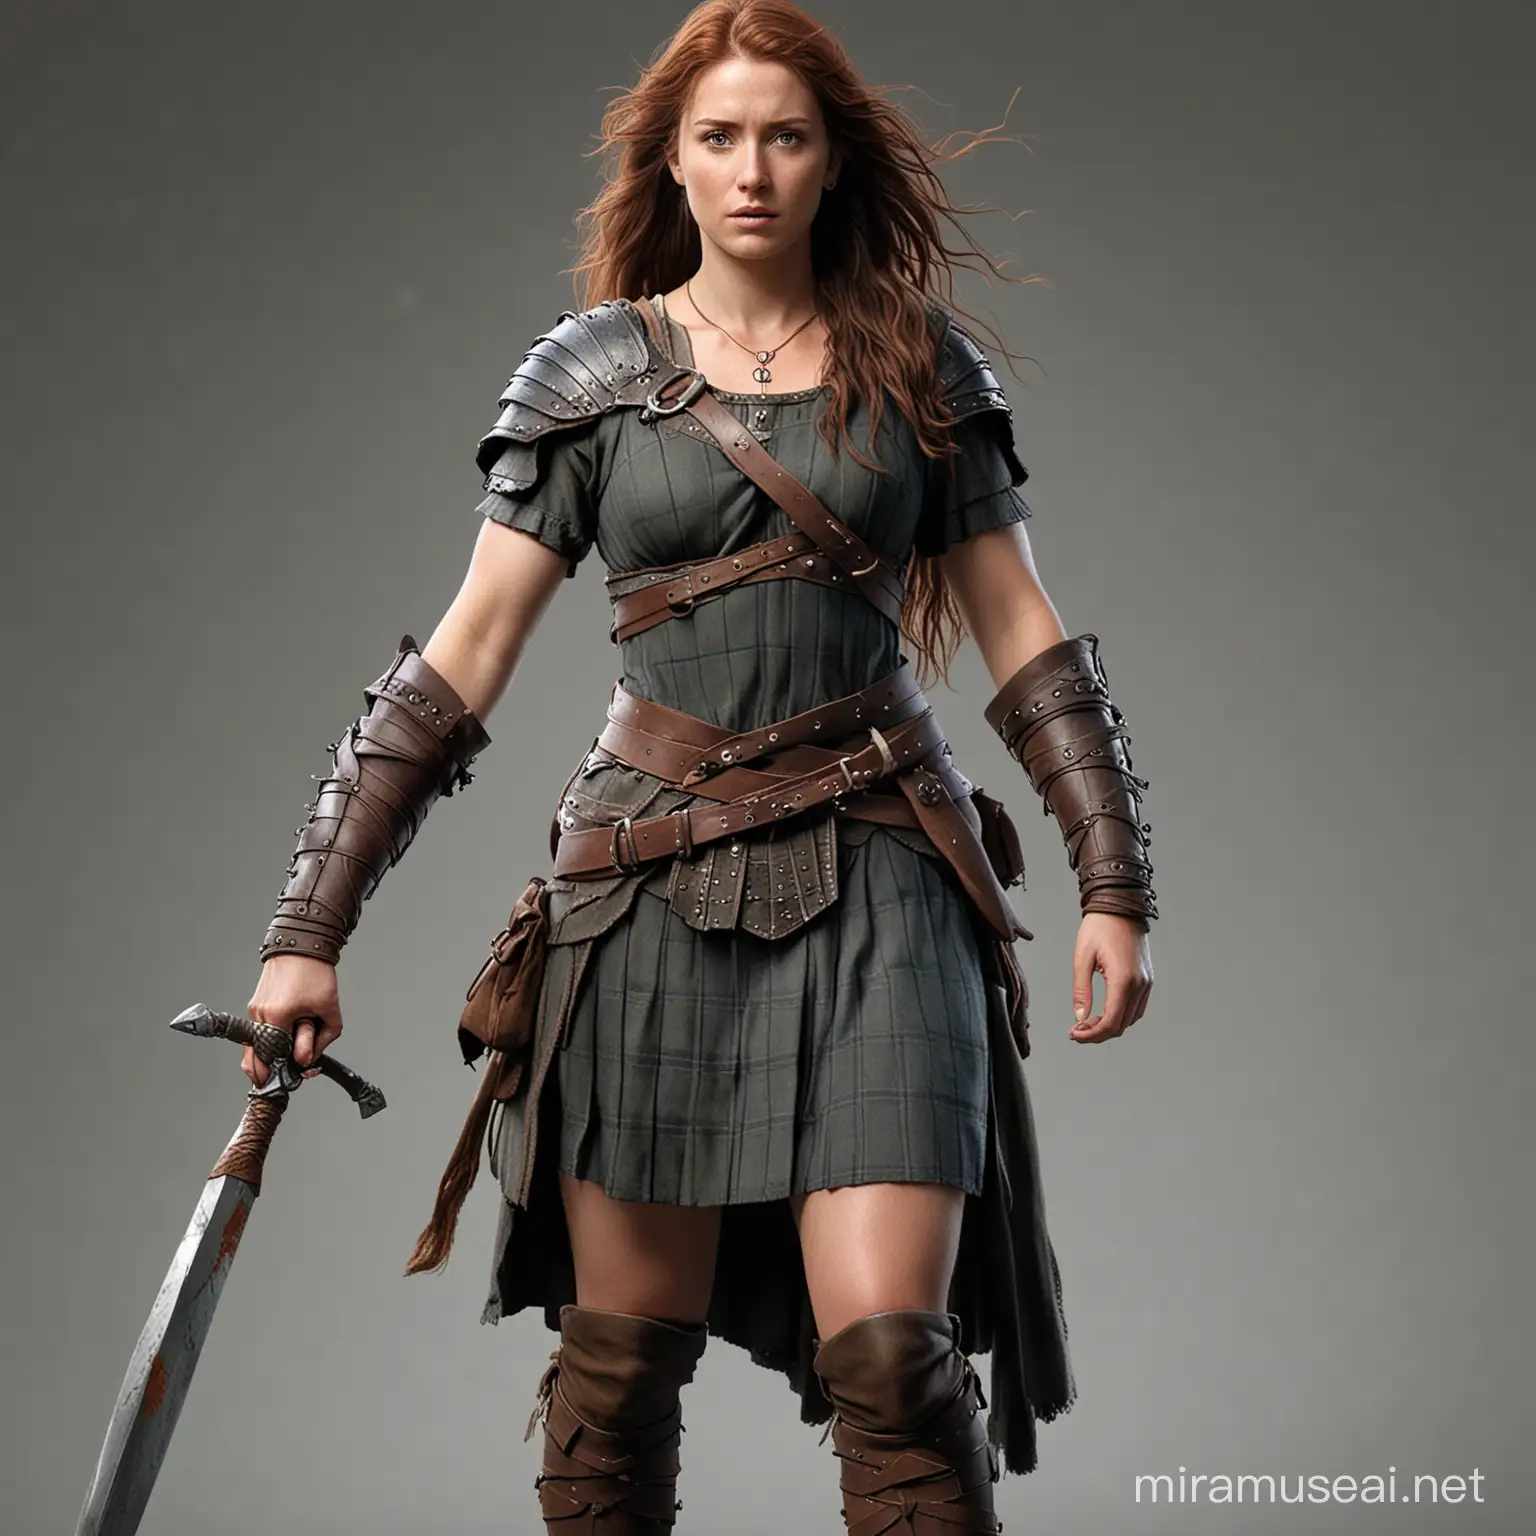 Bravehearts Female Counterpart Scottish Warrior in Full Armor